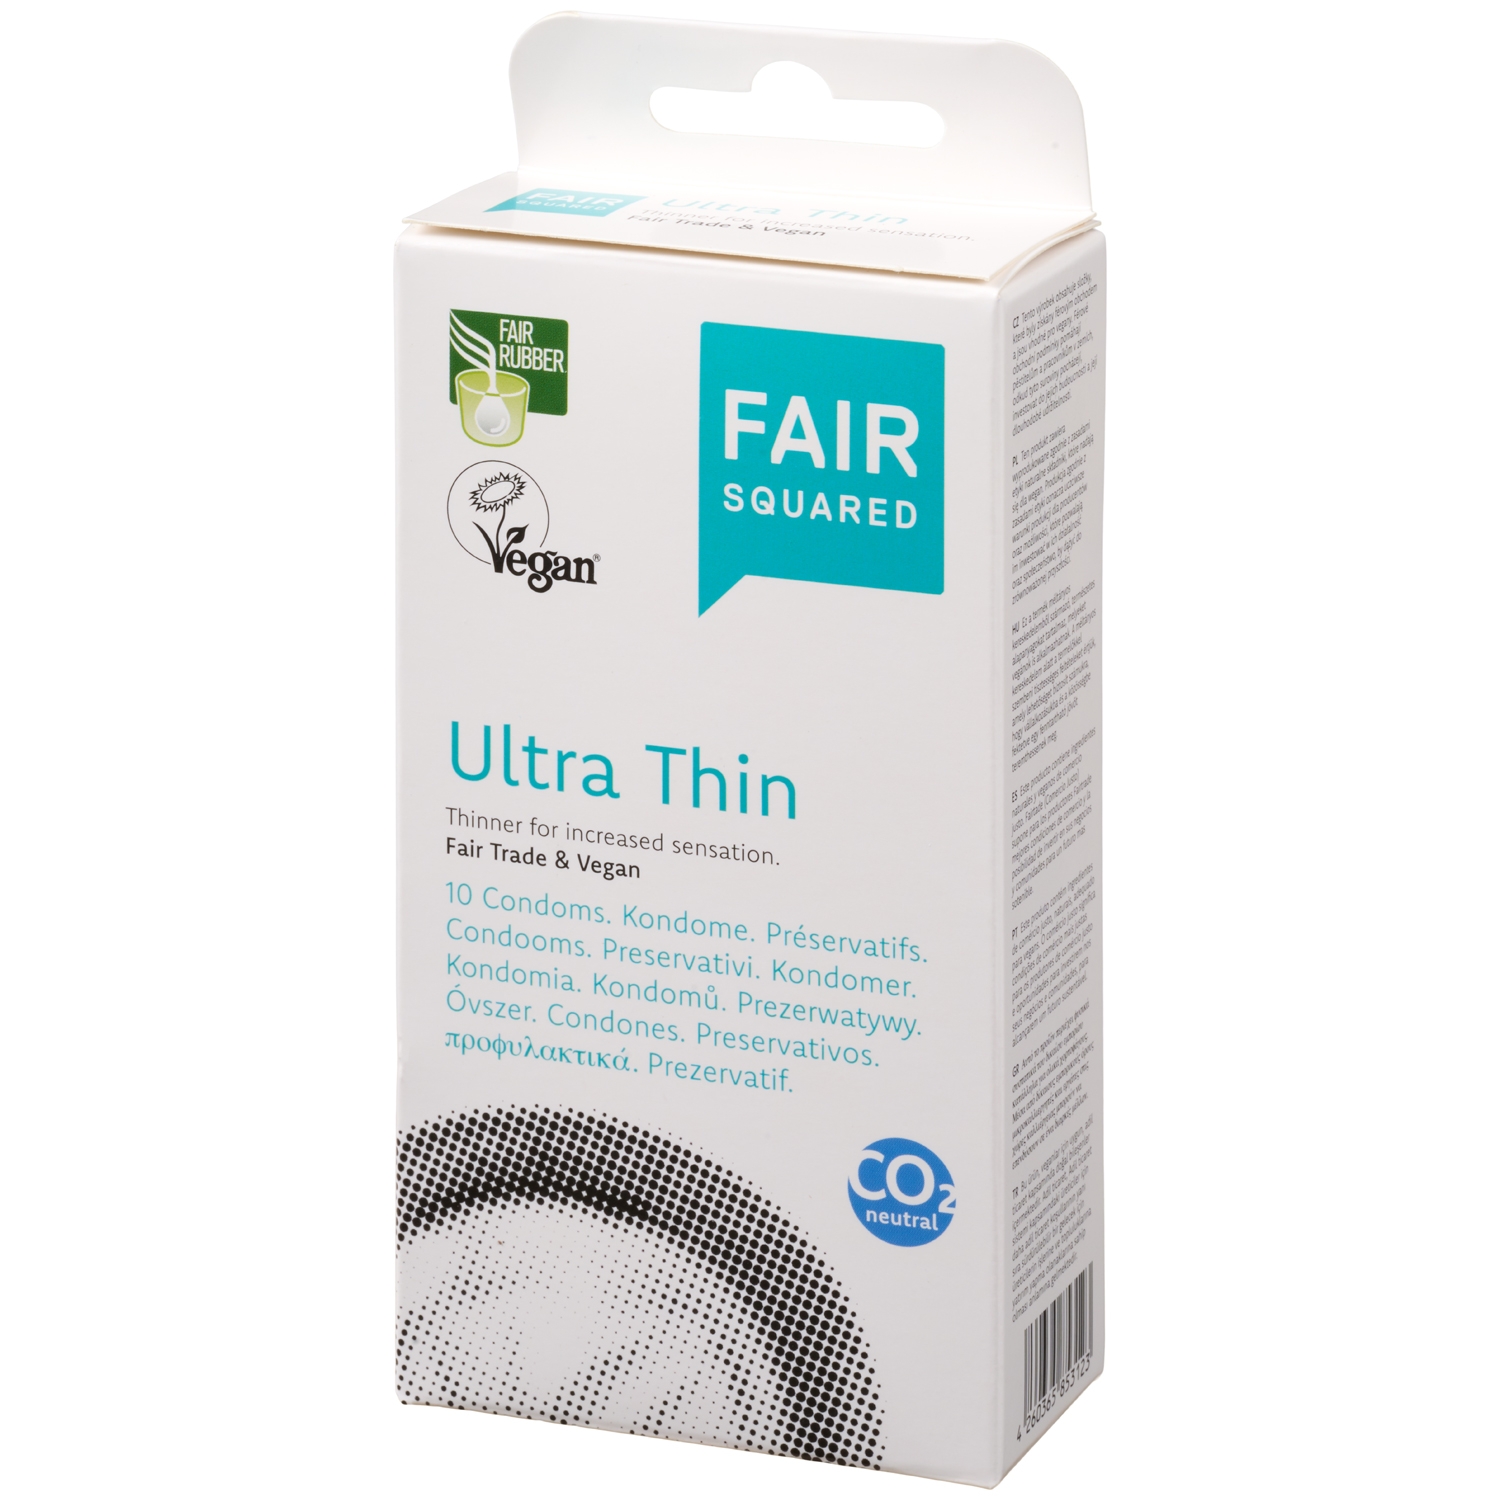 Fair Squared Ultra Thin Vegan Kondomer 10 stk - Klar thumbnail